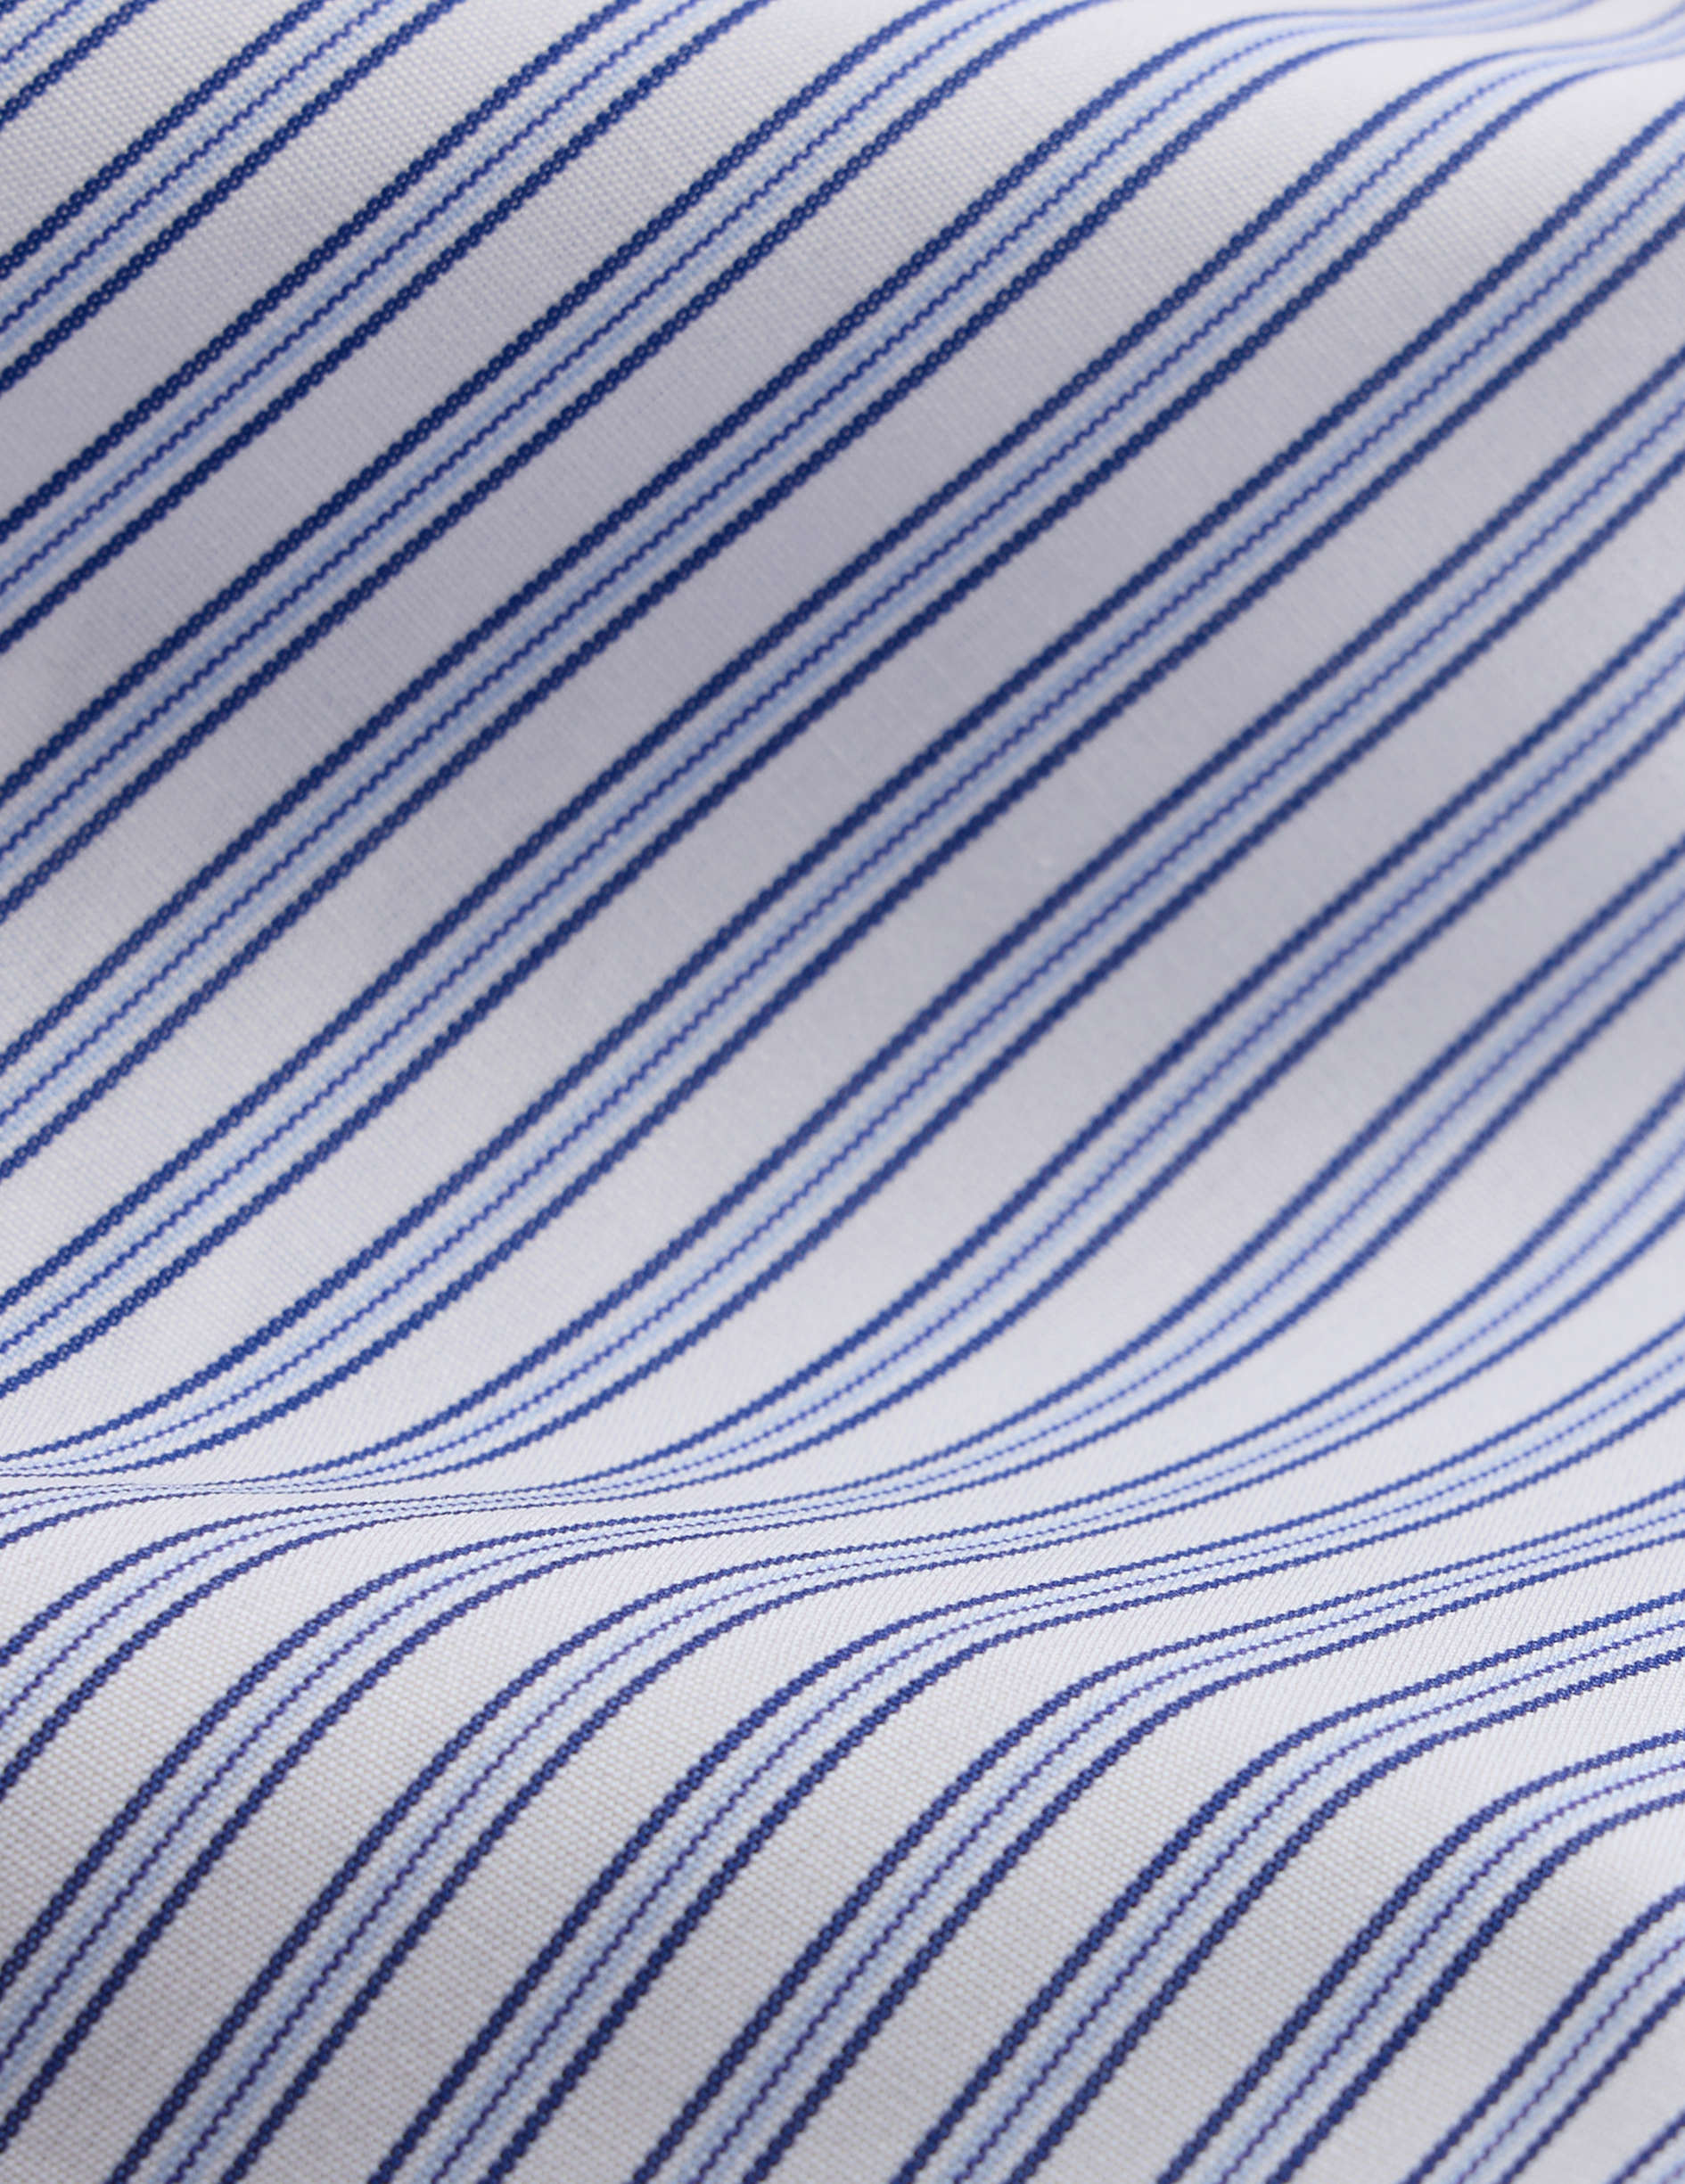 Chemise Semi-ajustée rayée bleu marine - Popeline - Col Américain